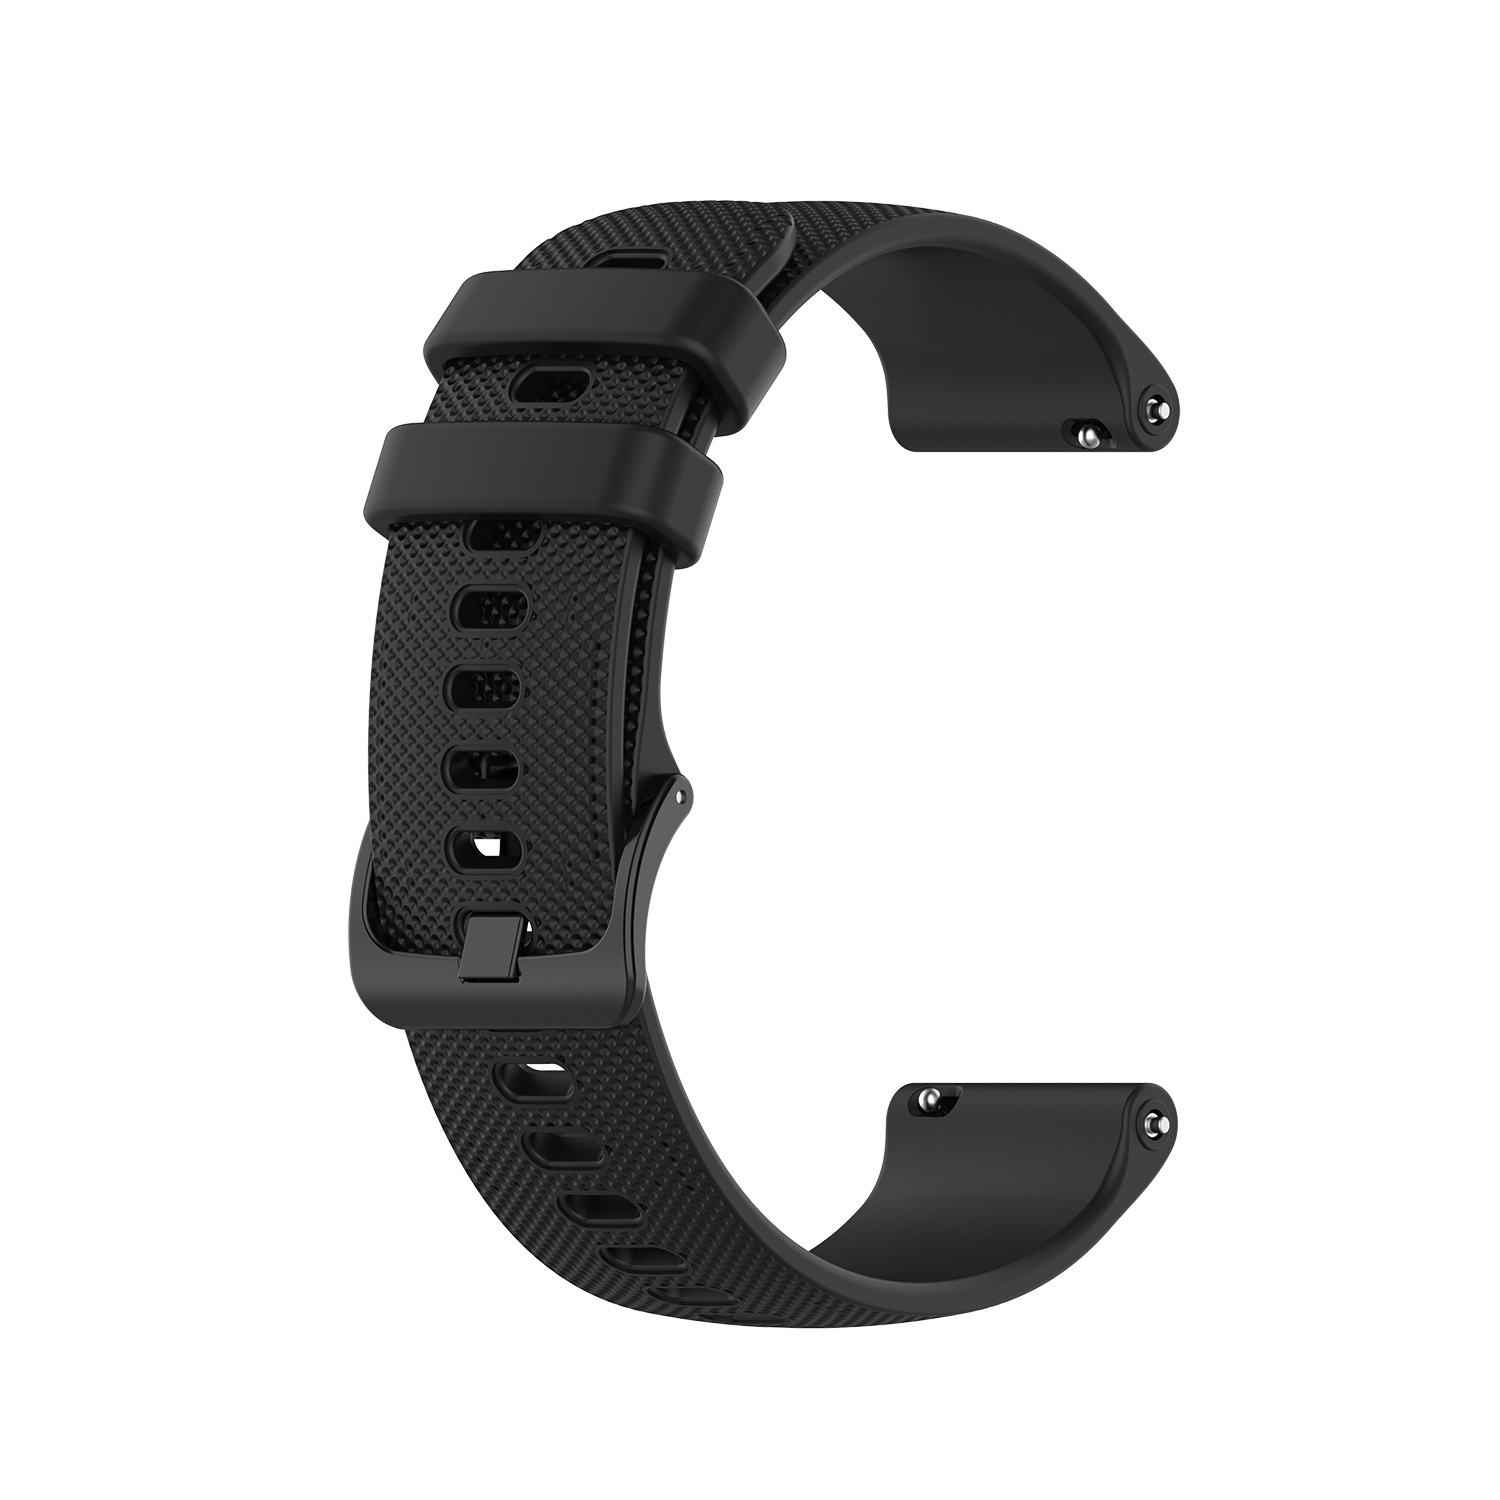 Cinturino sport con fibbia per Samsung Galaxy Watch - nero